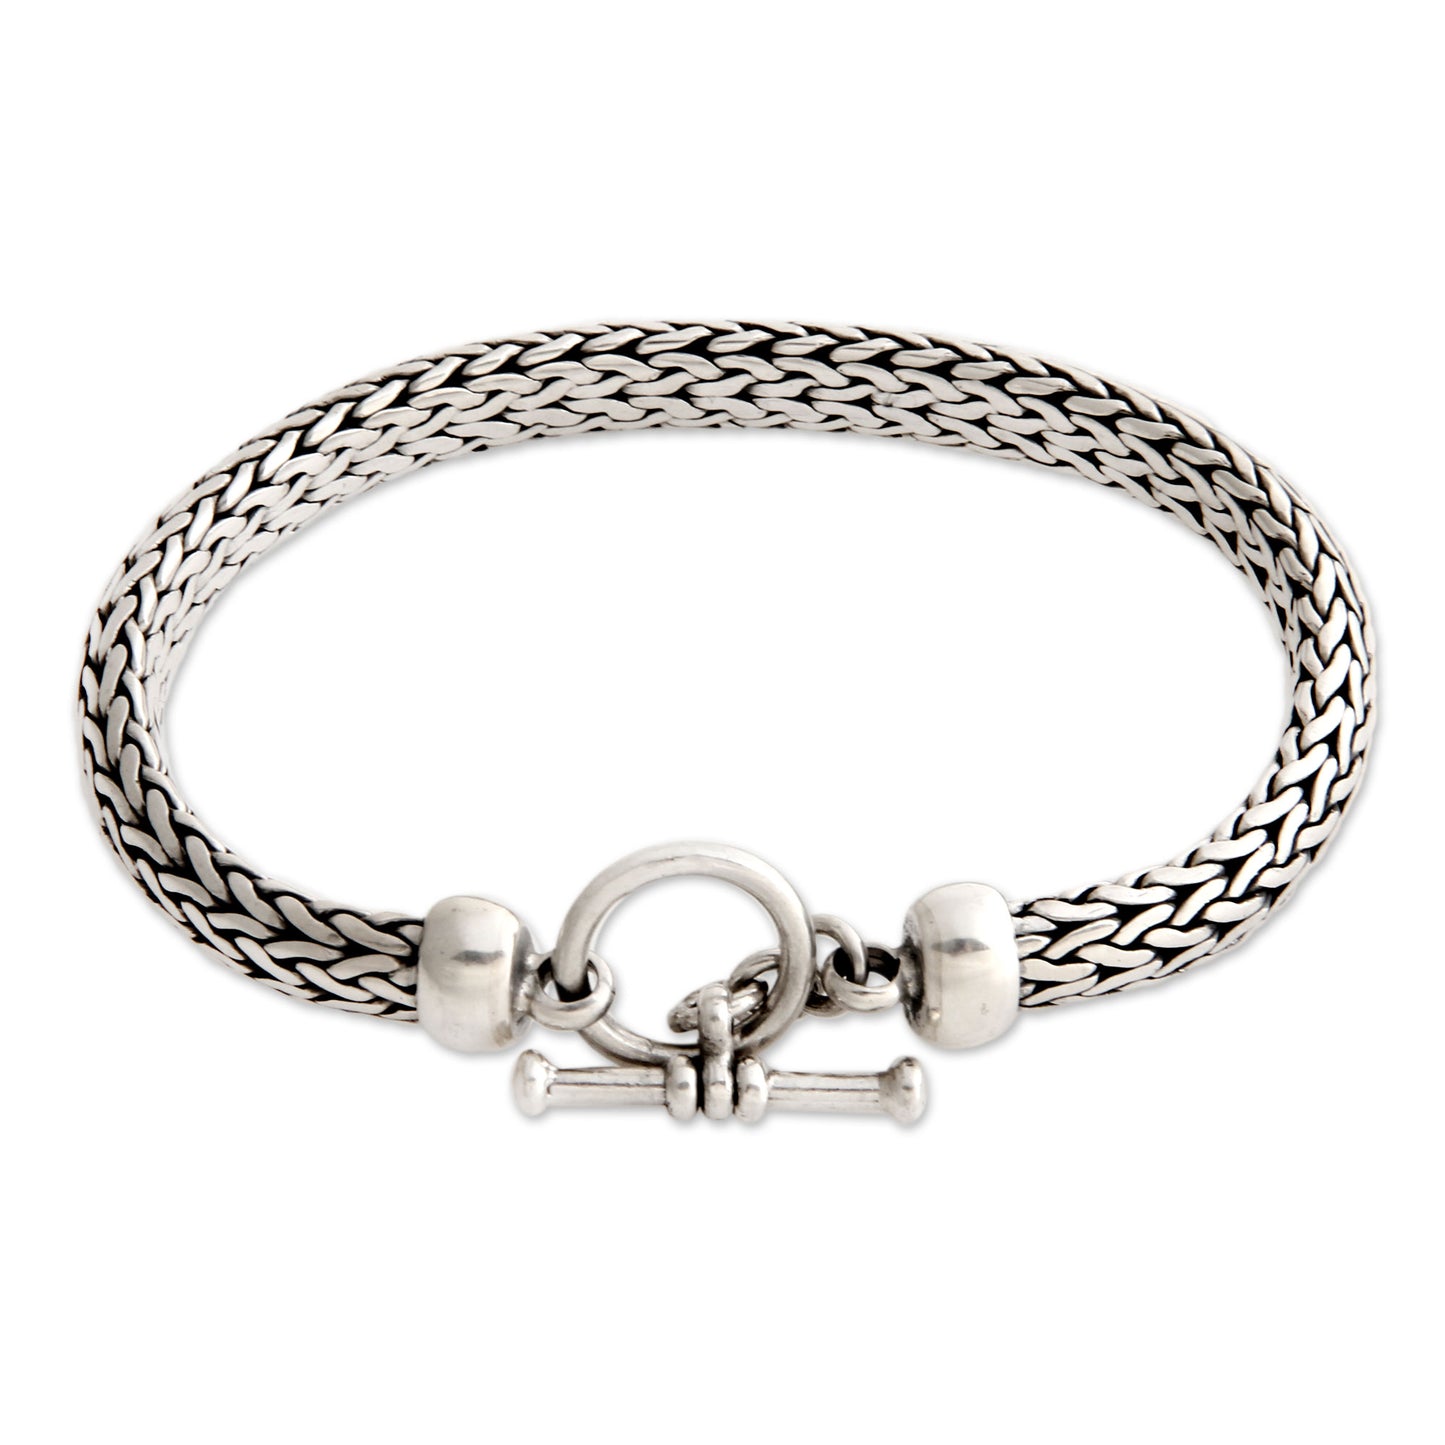 All Night Sterling Silver Men's Chain Bracelet